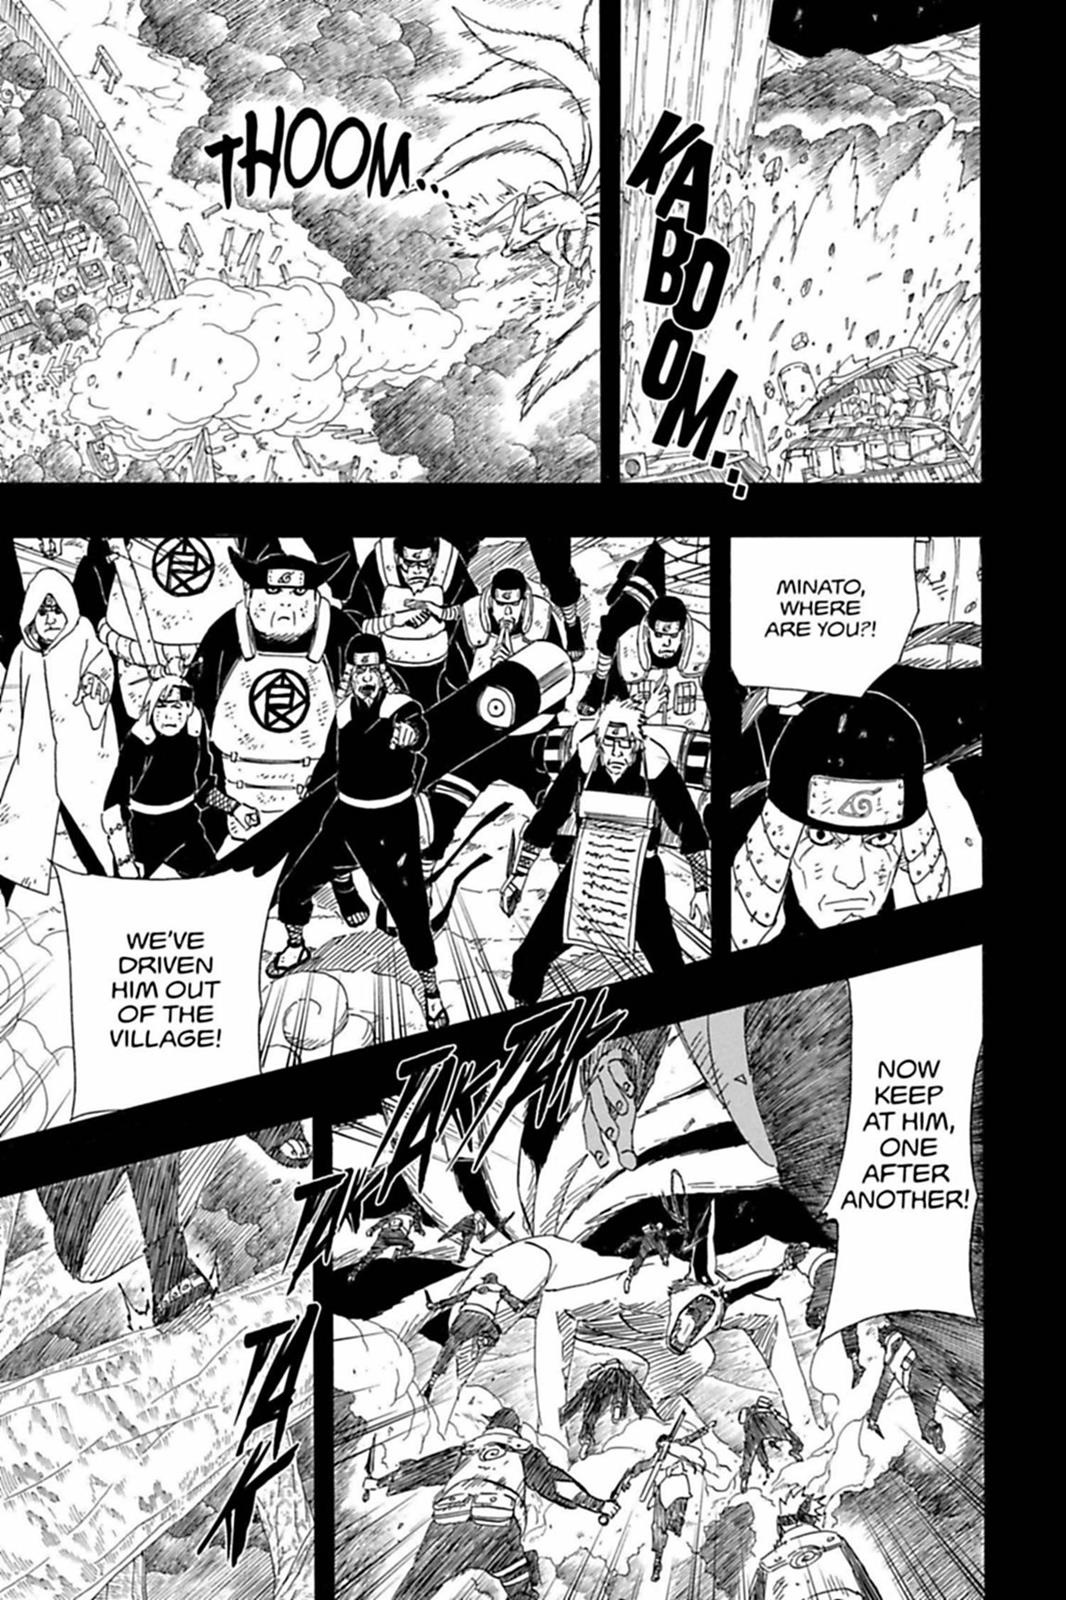 Ginkaku e Kira vs Tobirama e Minato - Página 5 0503-008